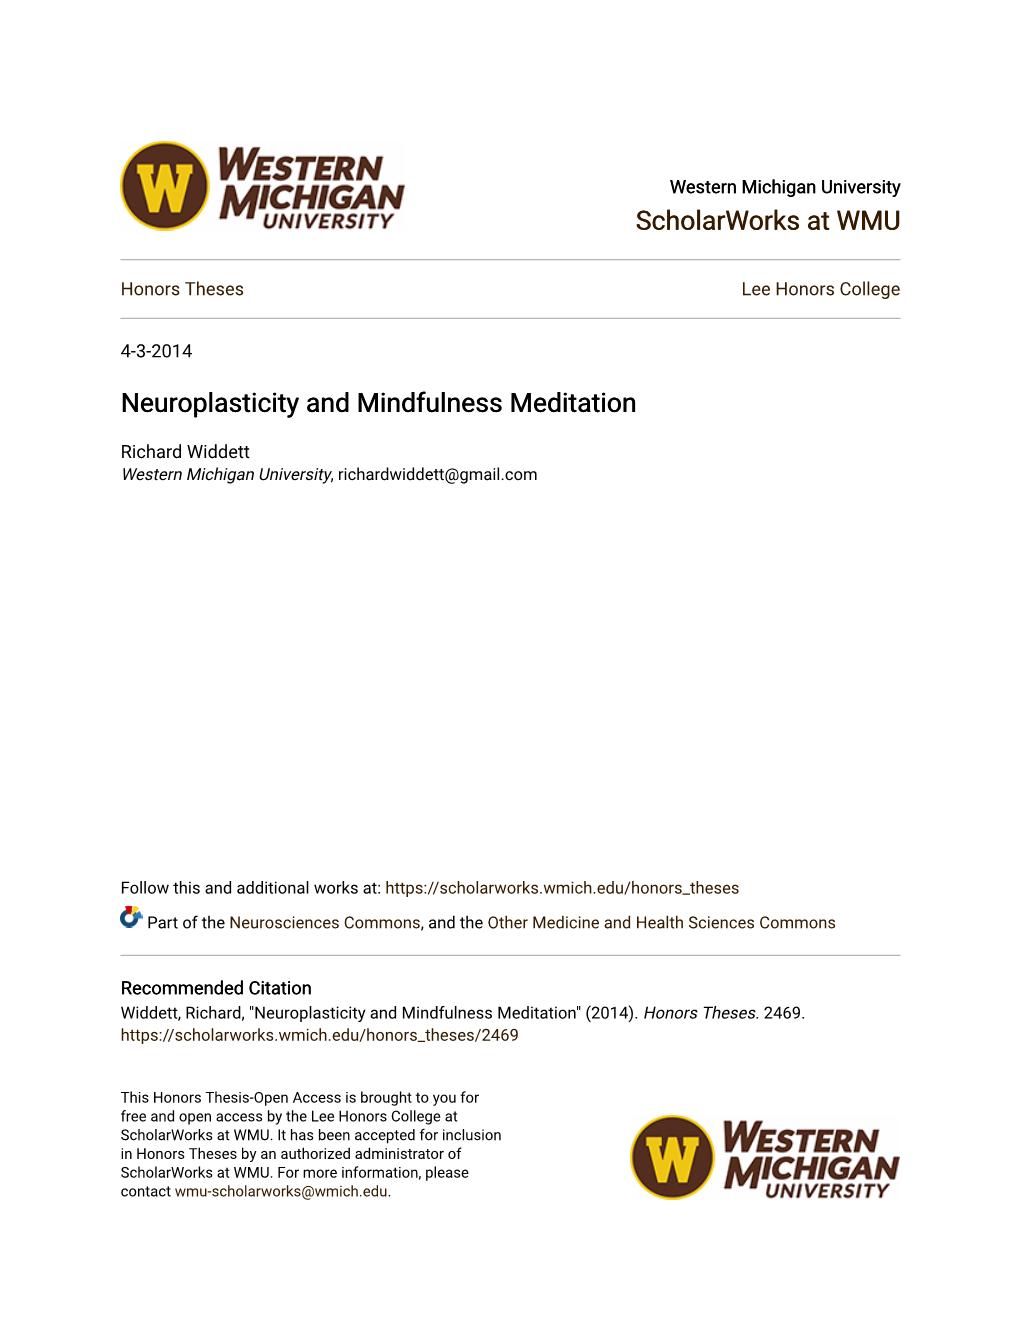 Neuroplasticity and Mindfulness Meditation